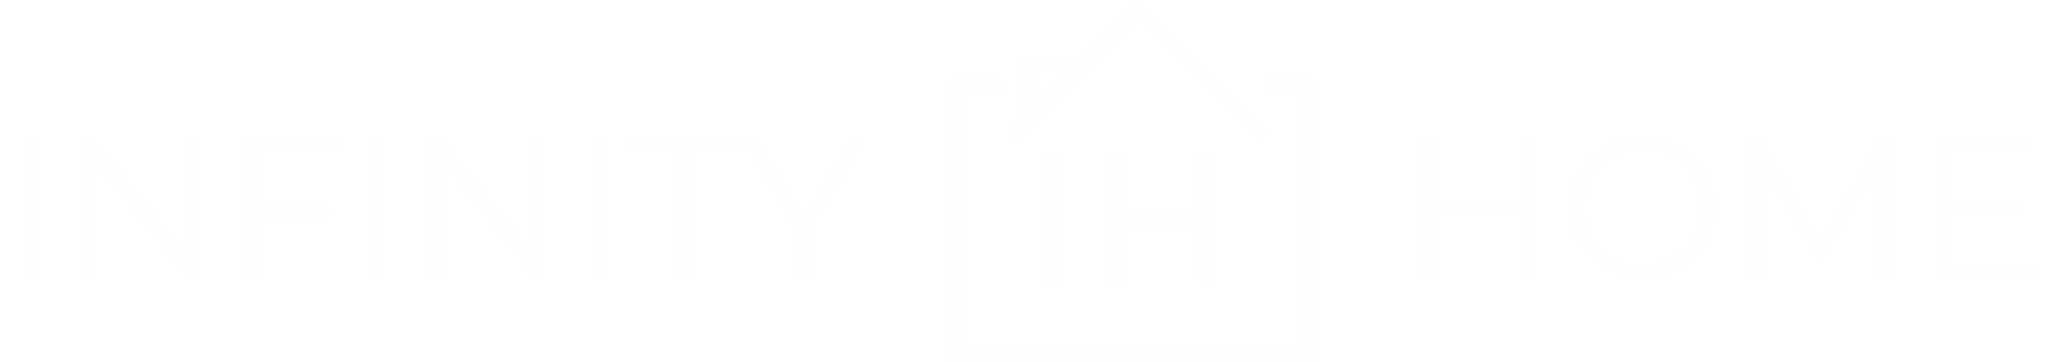 novyj-logo-min-2048x362 (1)